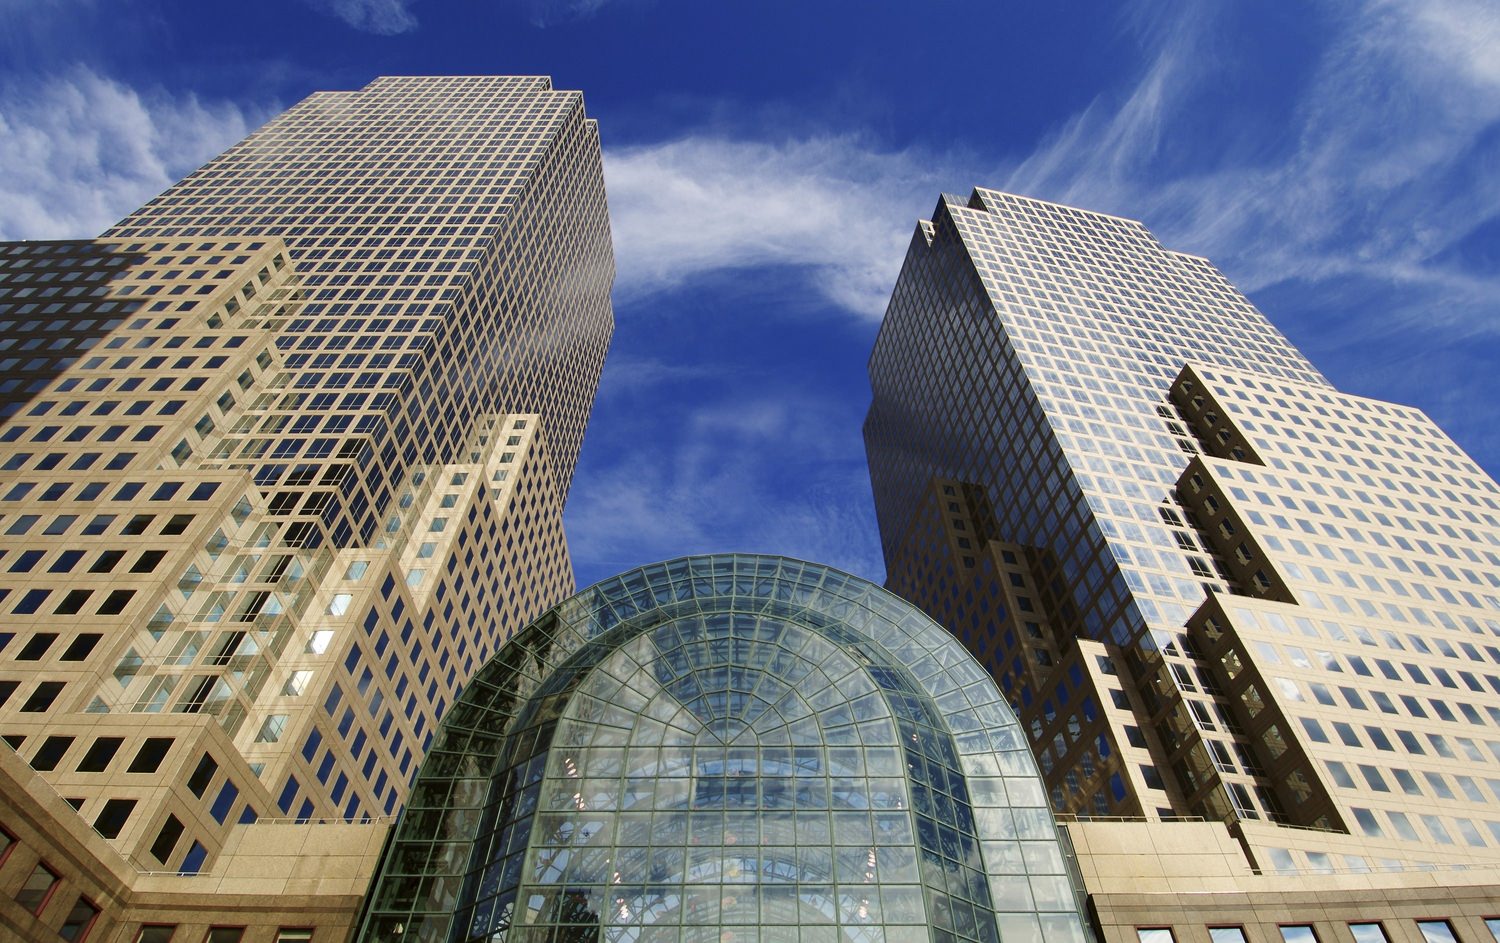 Upward view of a skyscraper with a glass atrium.